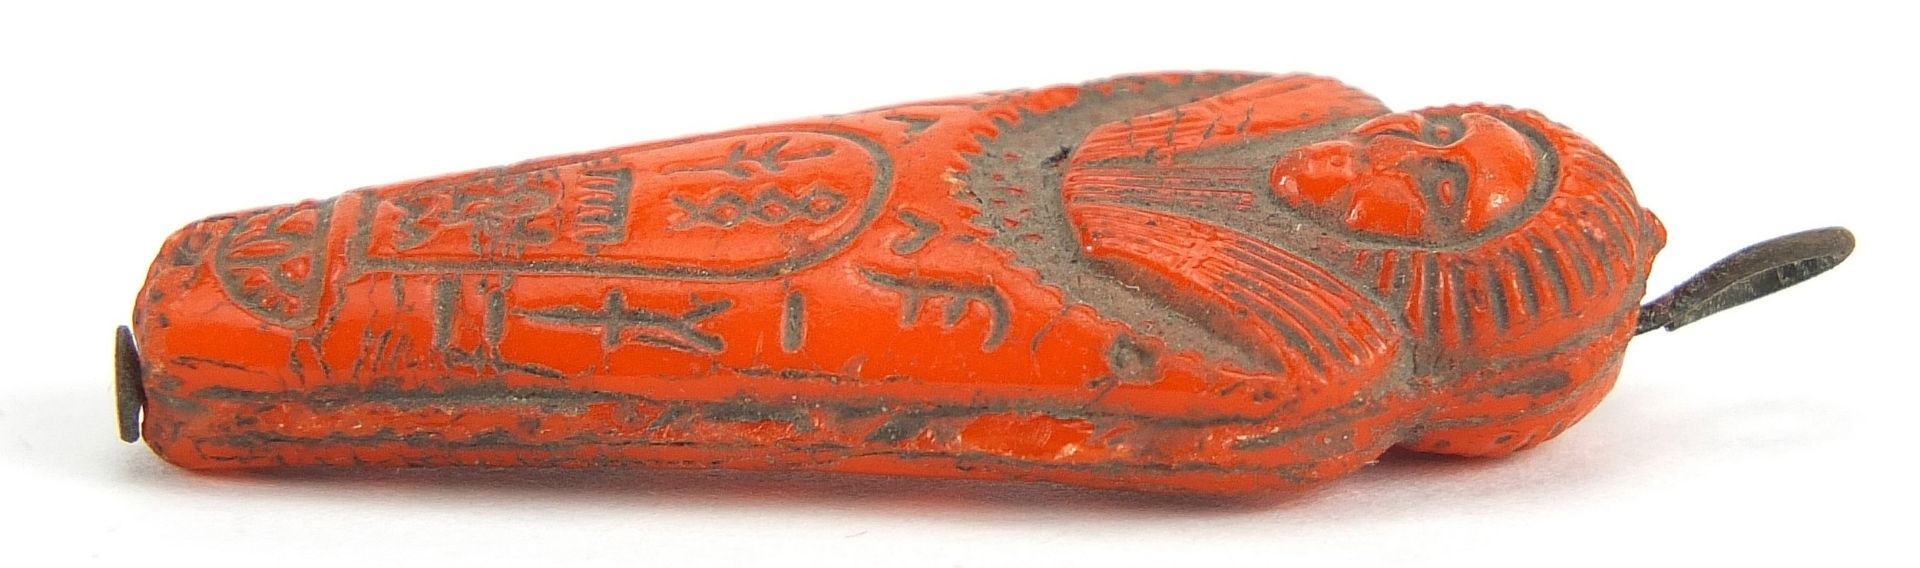 Egyptian ushabti pendant decorated with hieroglyphics, 3.5cm high - Image 3 of 6